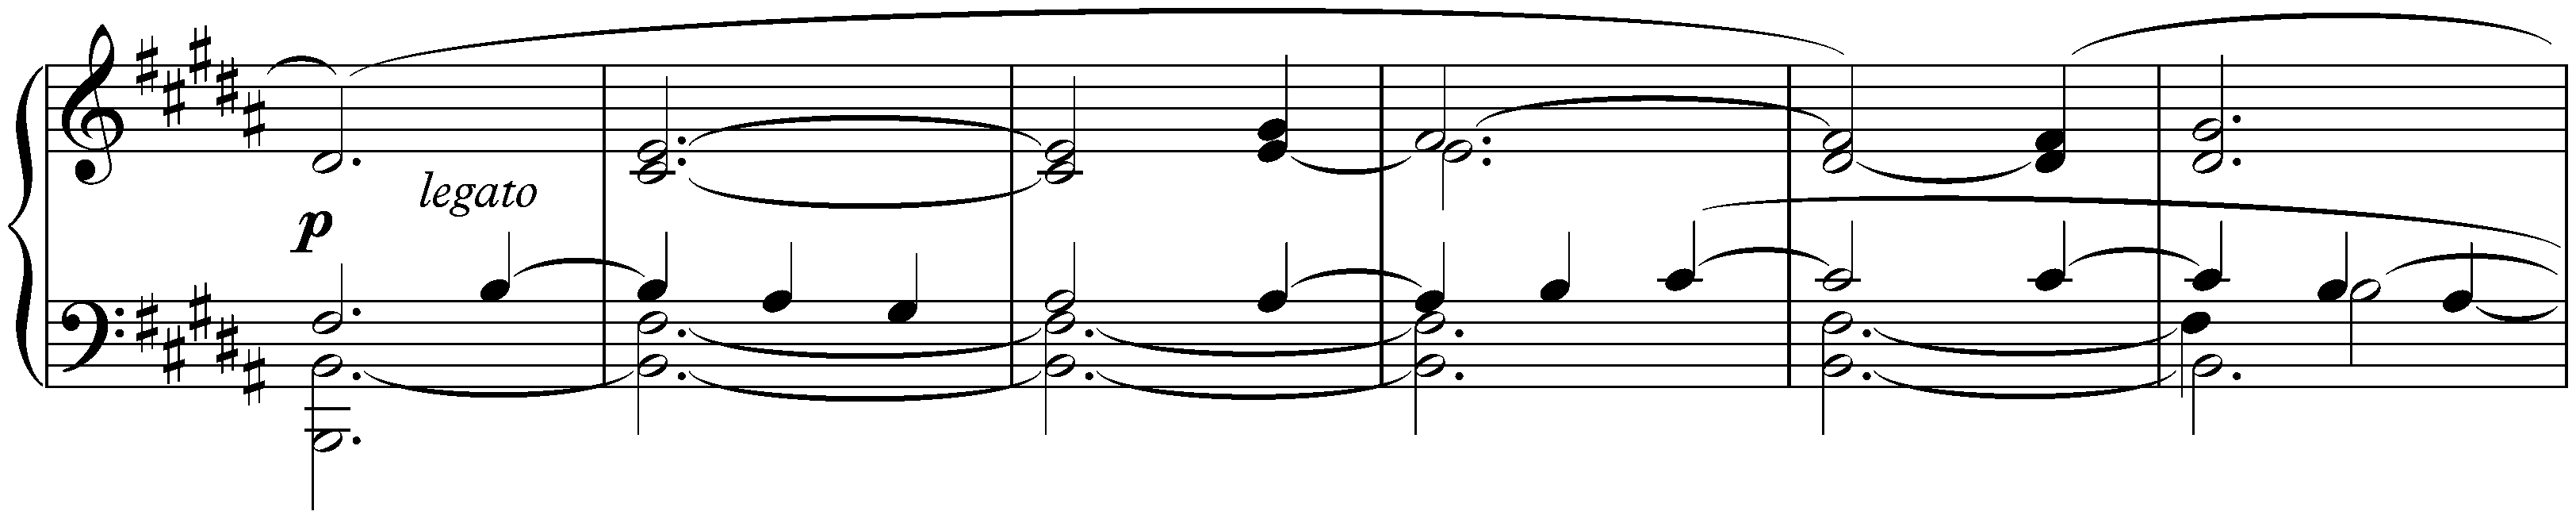 Sonata no. 3 in B minor, op. 58; 2. Scherzo: Molto vivace